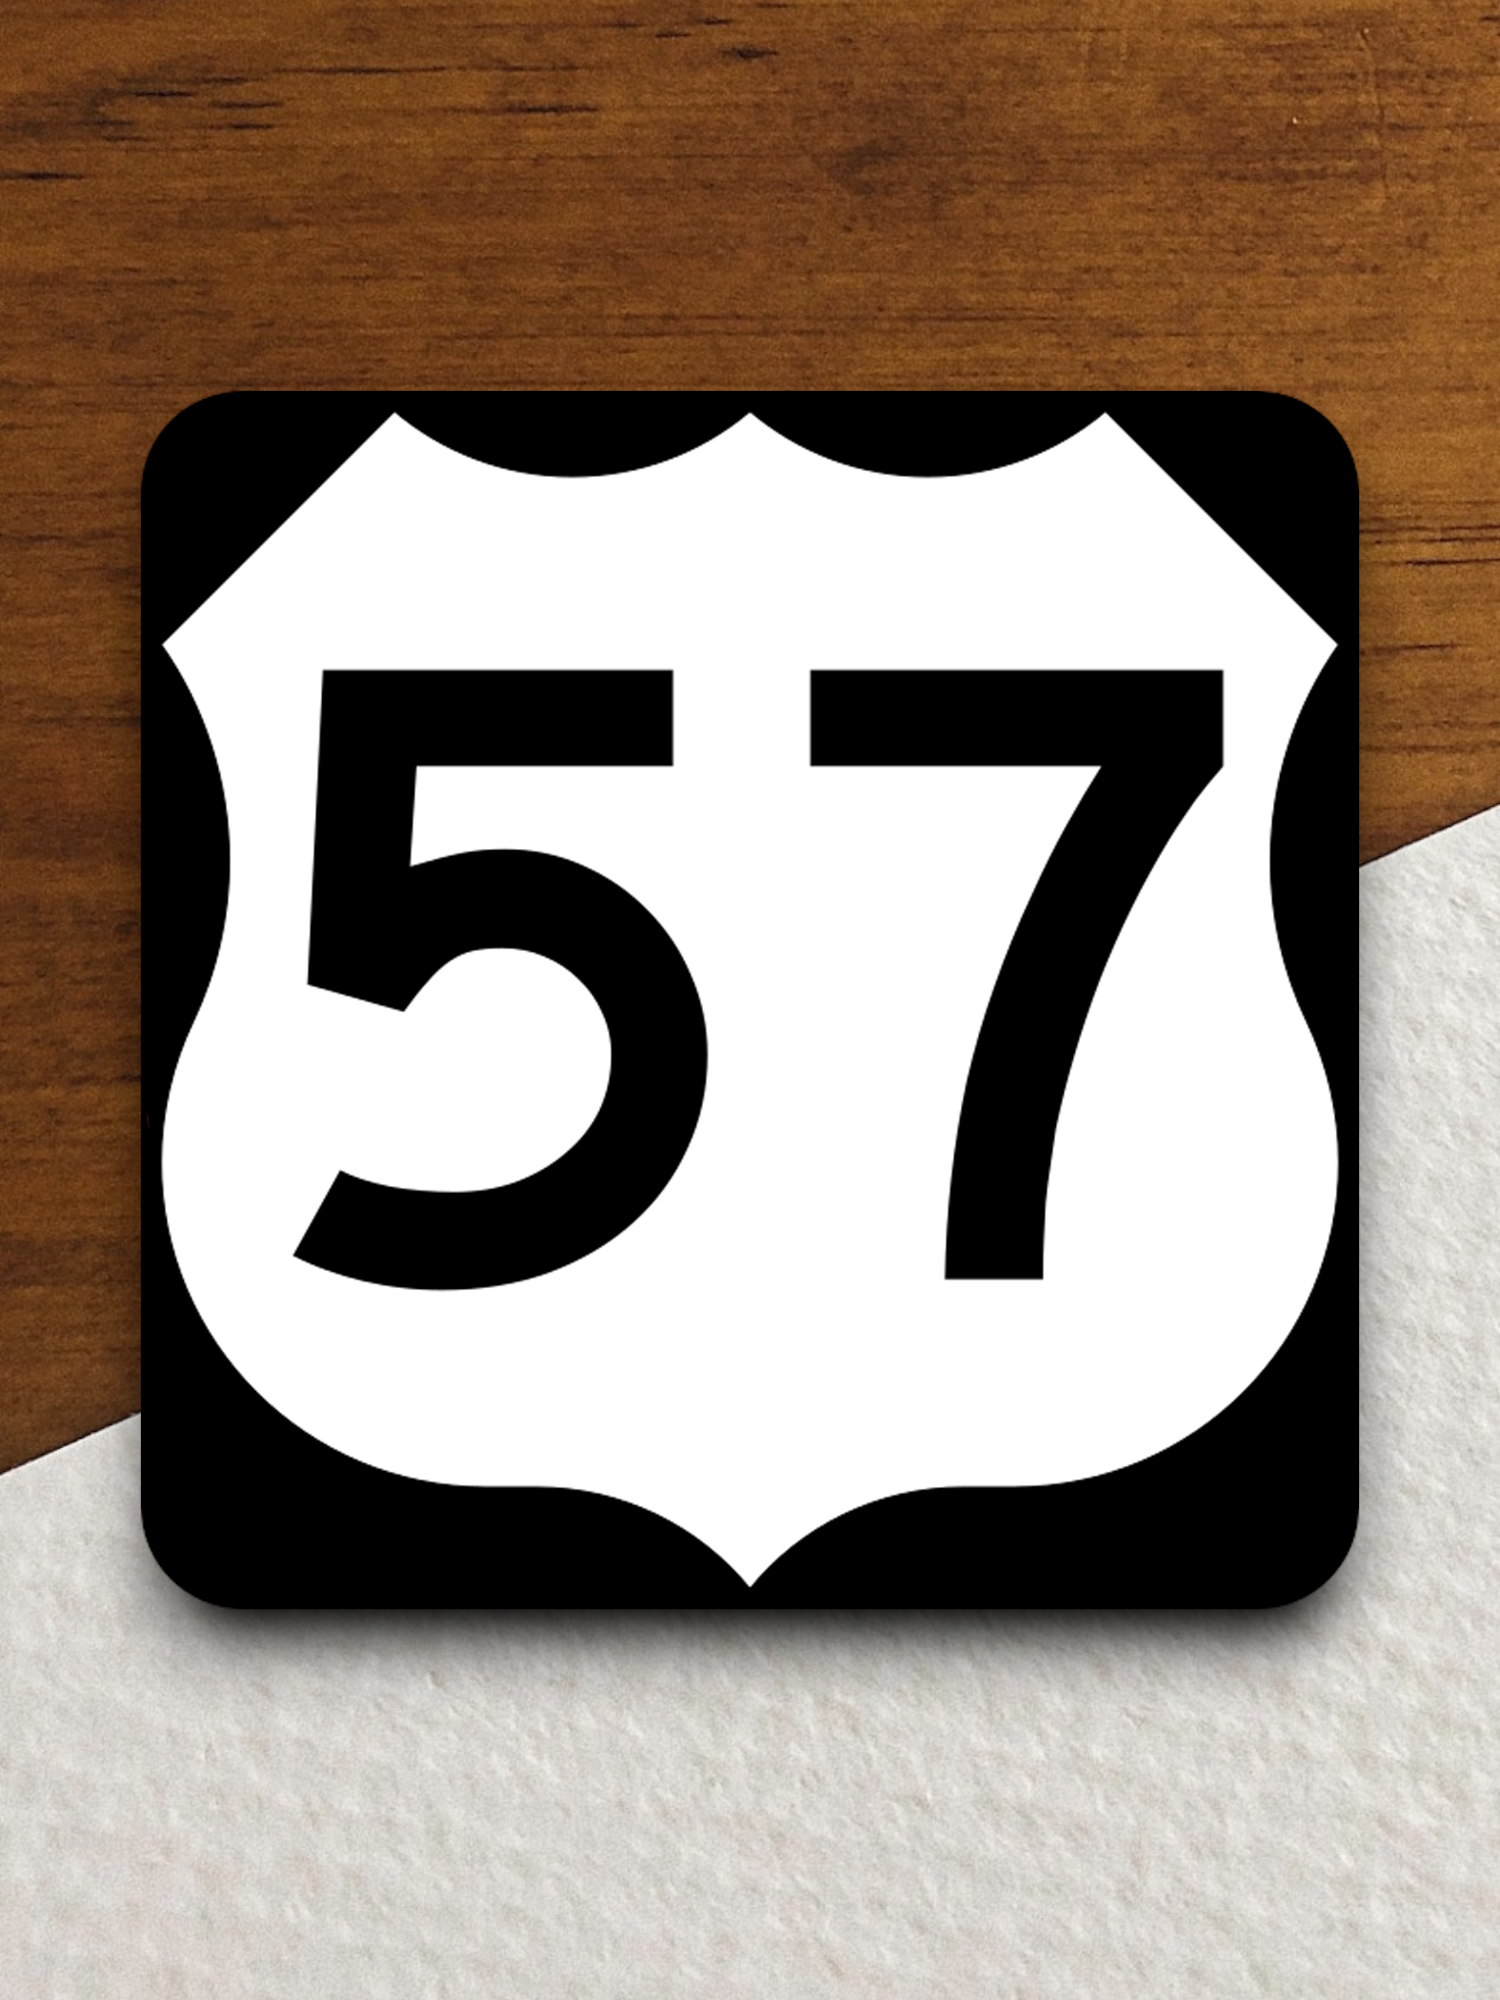 U.S. Route 57 Road Sign Sticker